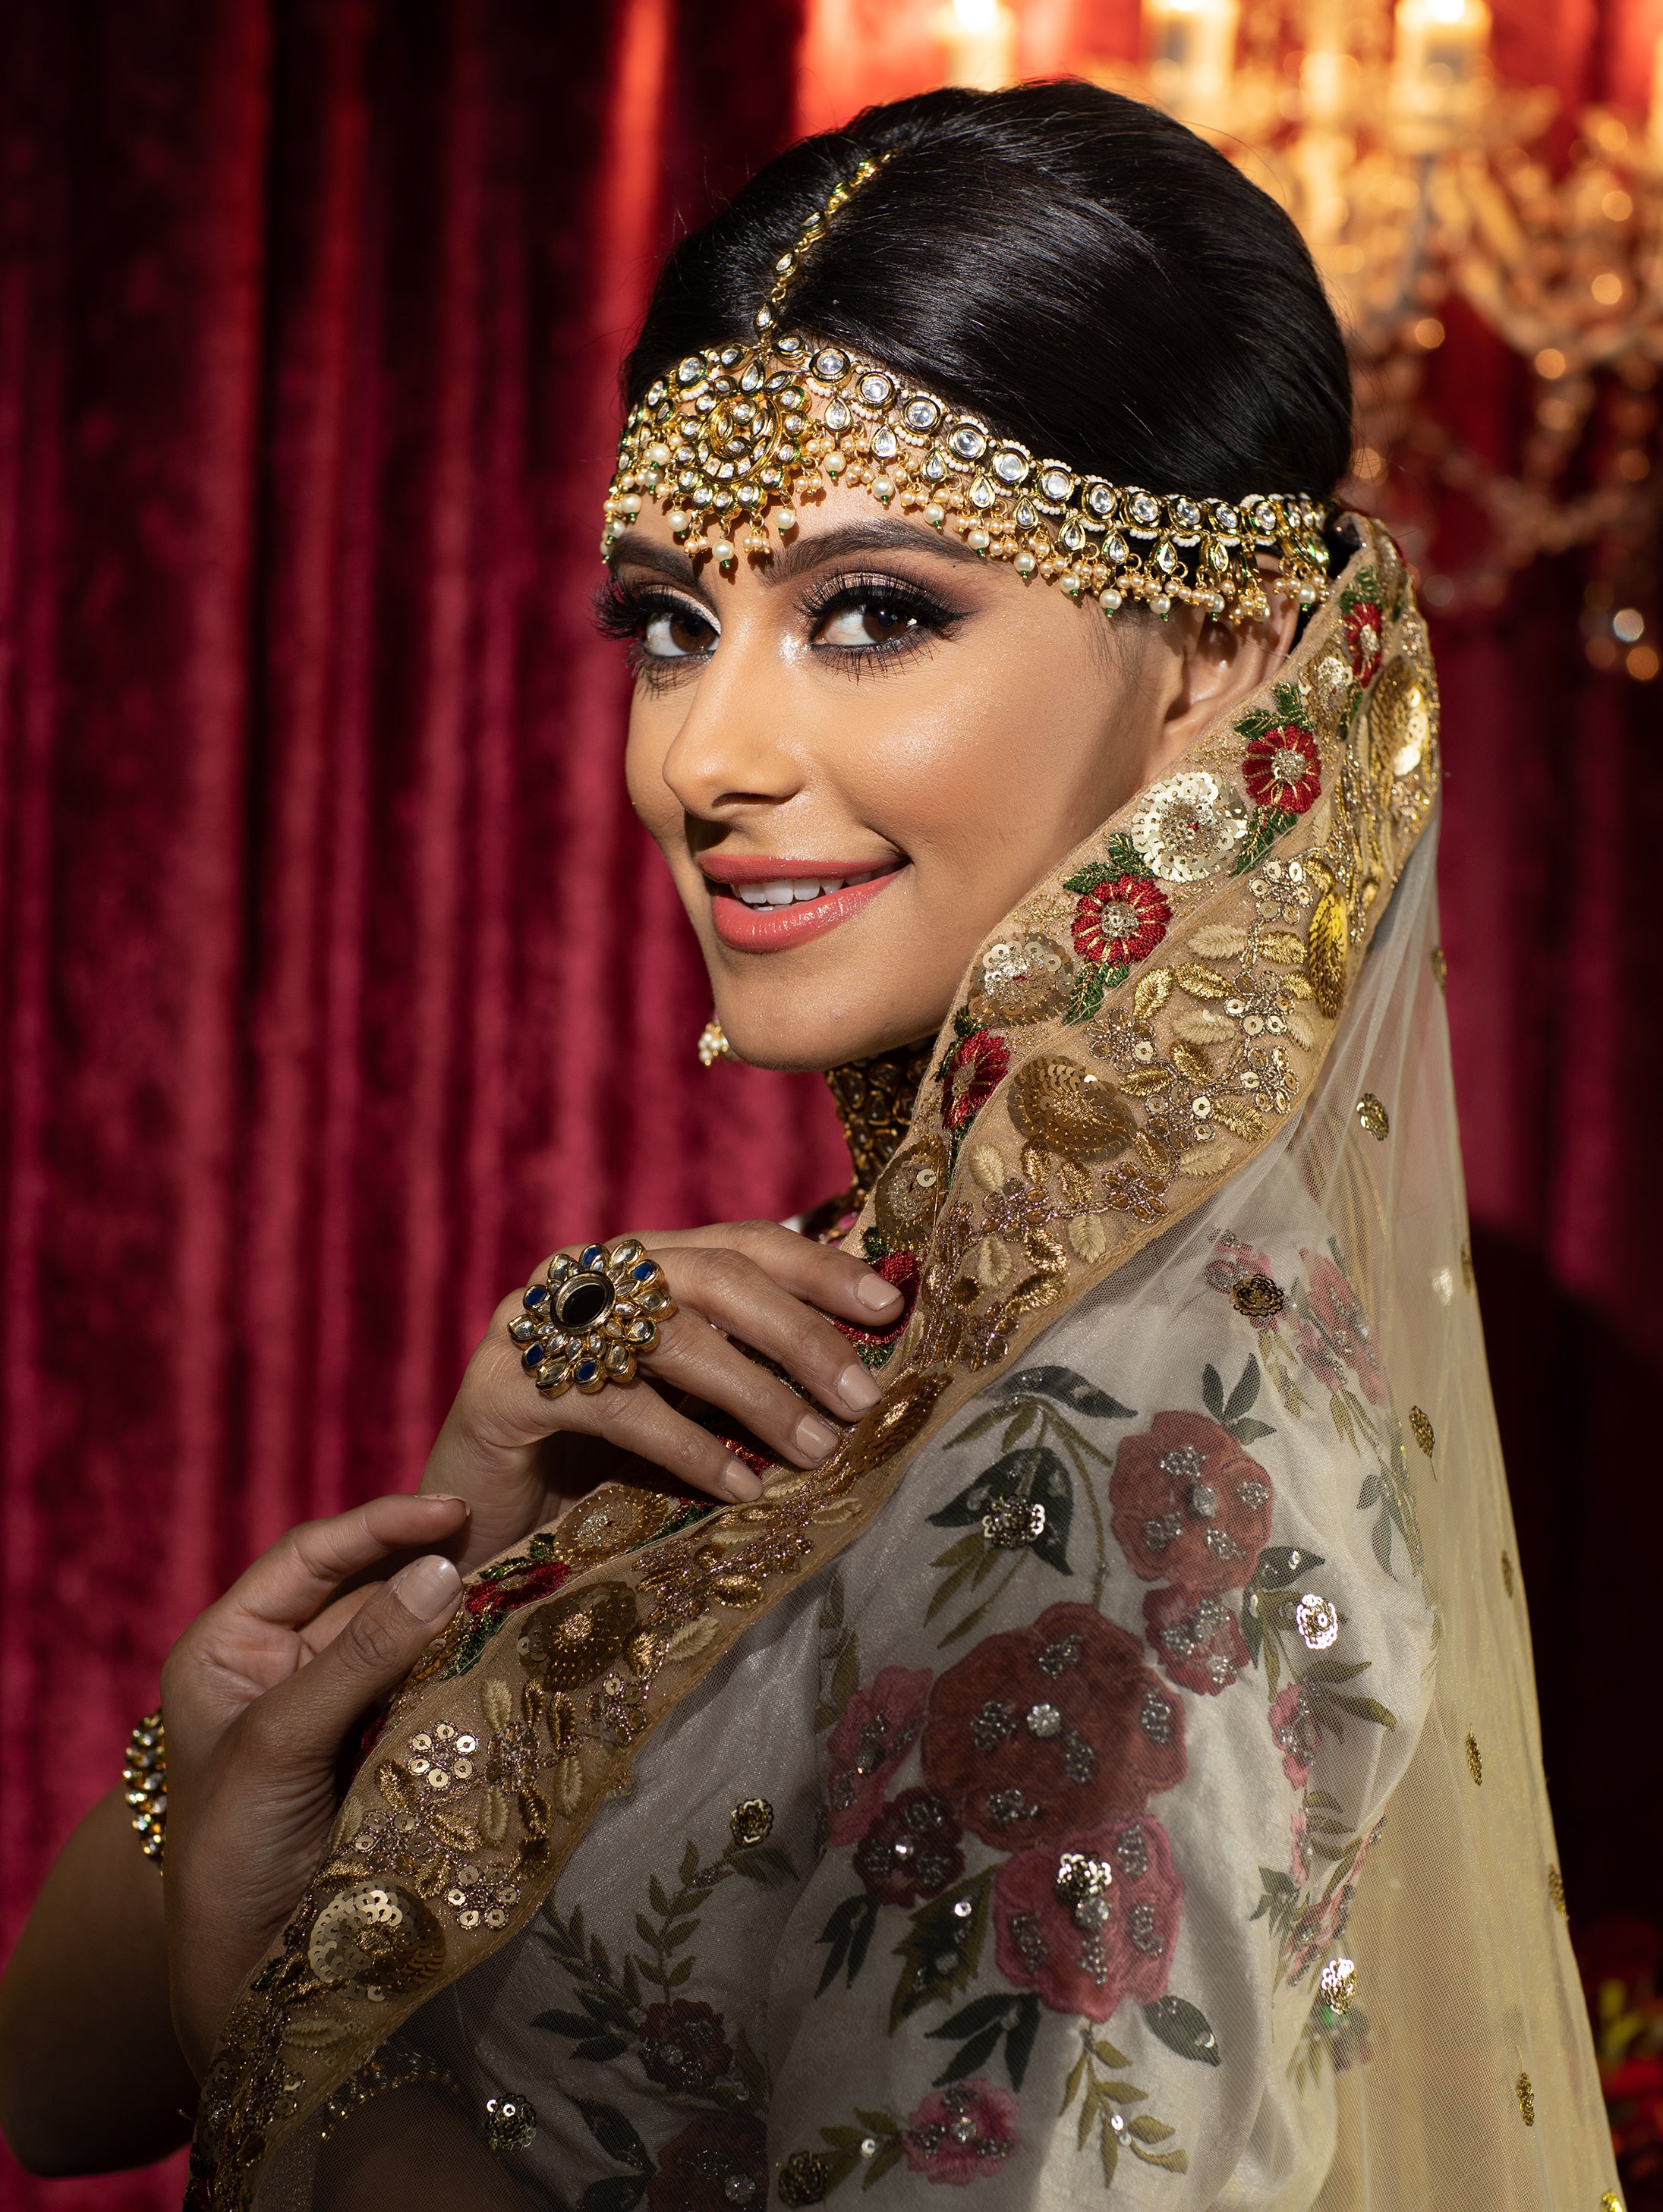 Bridal Indian Clothing Custom Designs - Denver, CO - India Fashion X